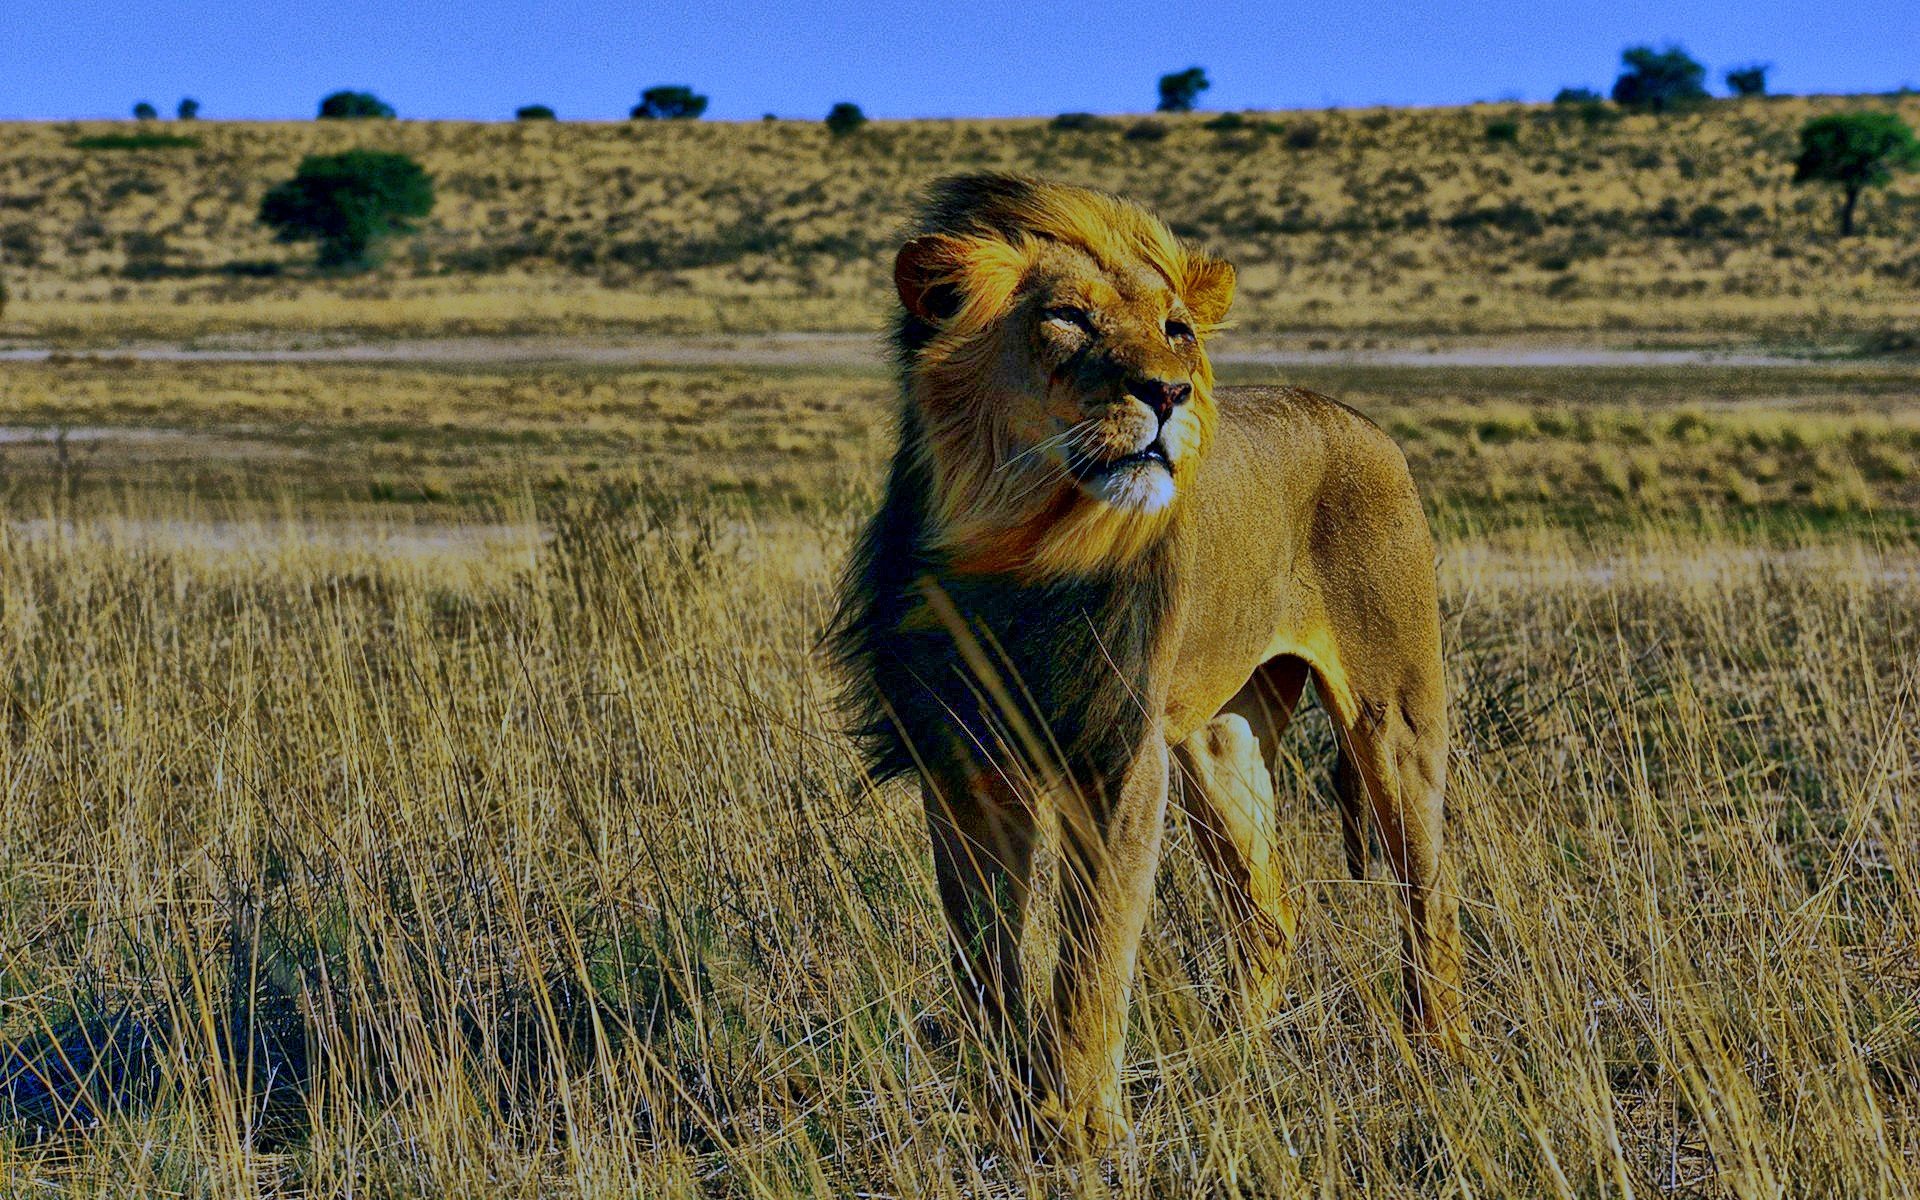 animals, Lions Wallpaper